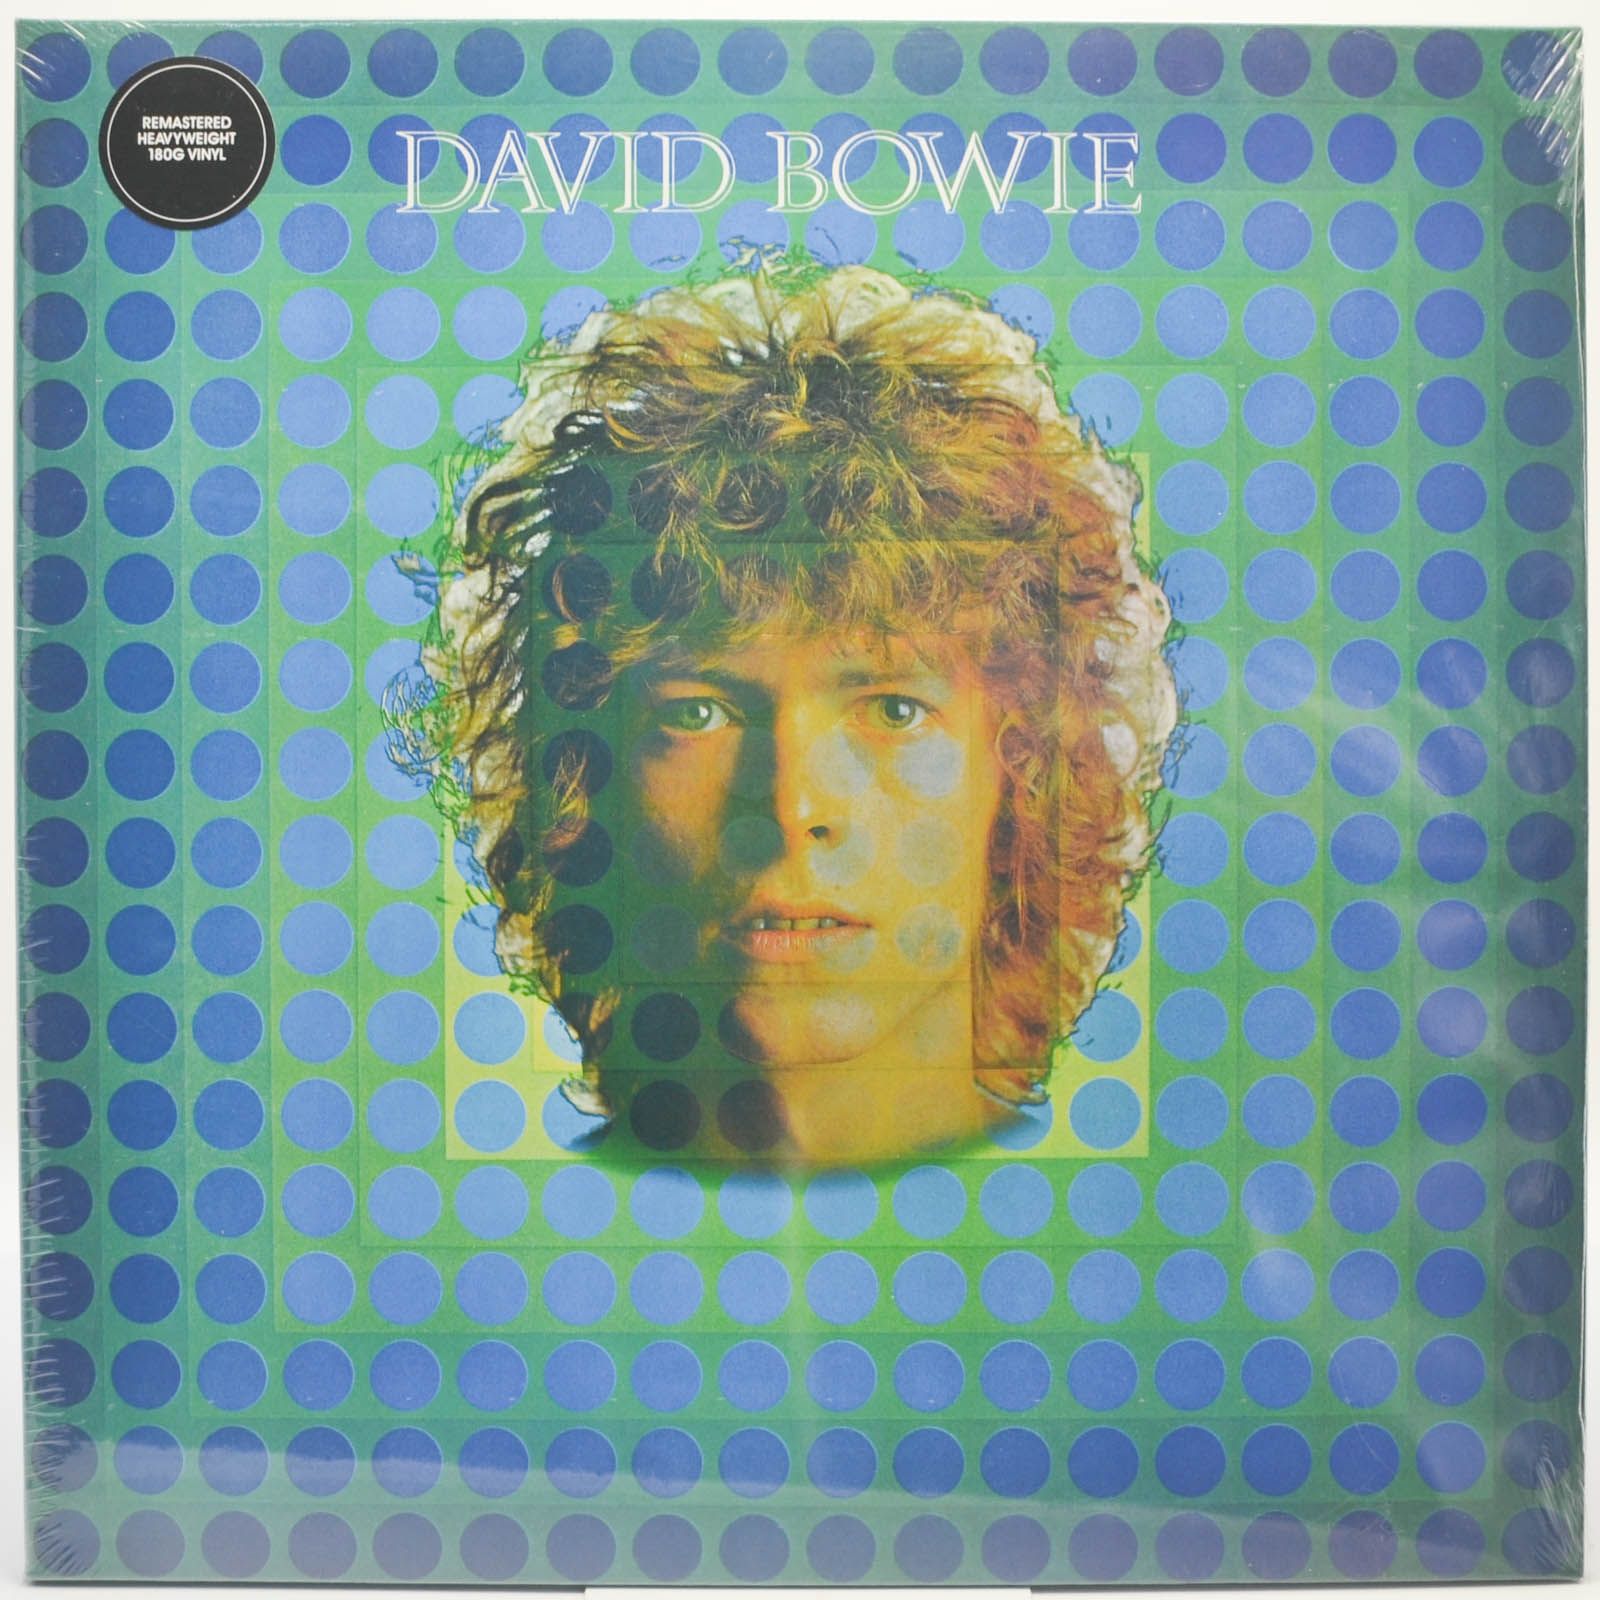 David Bowie — David Bowie, 1969